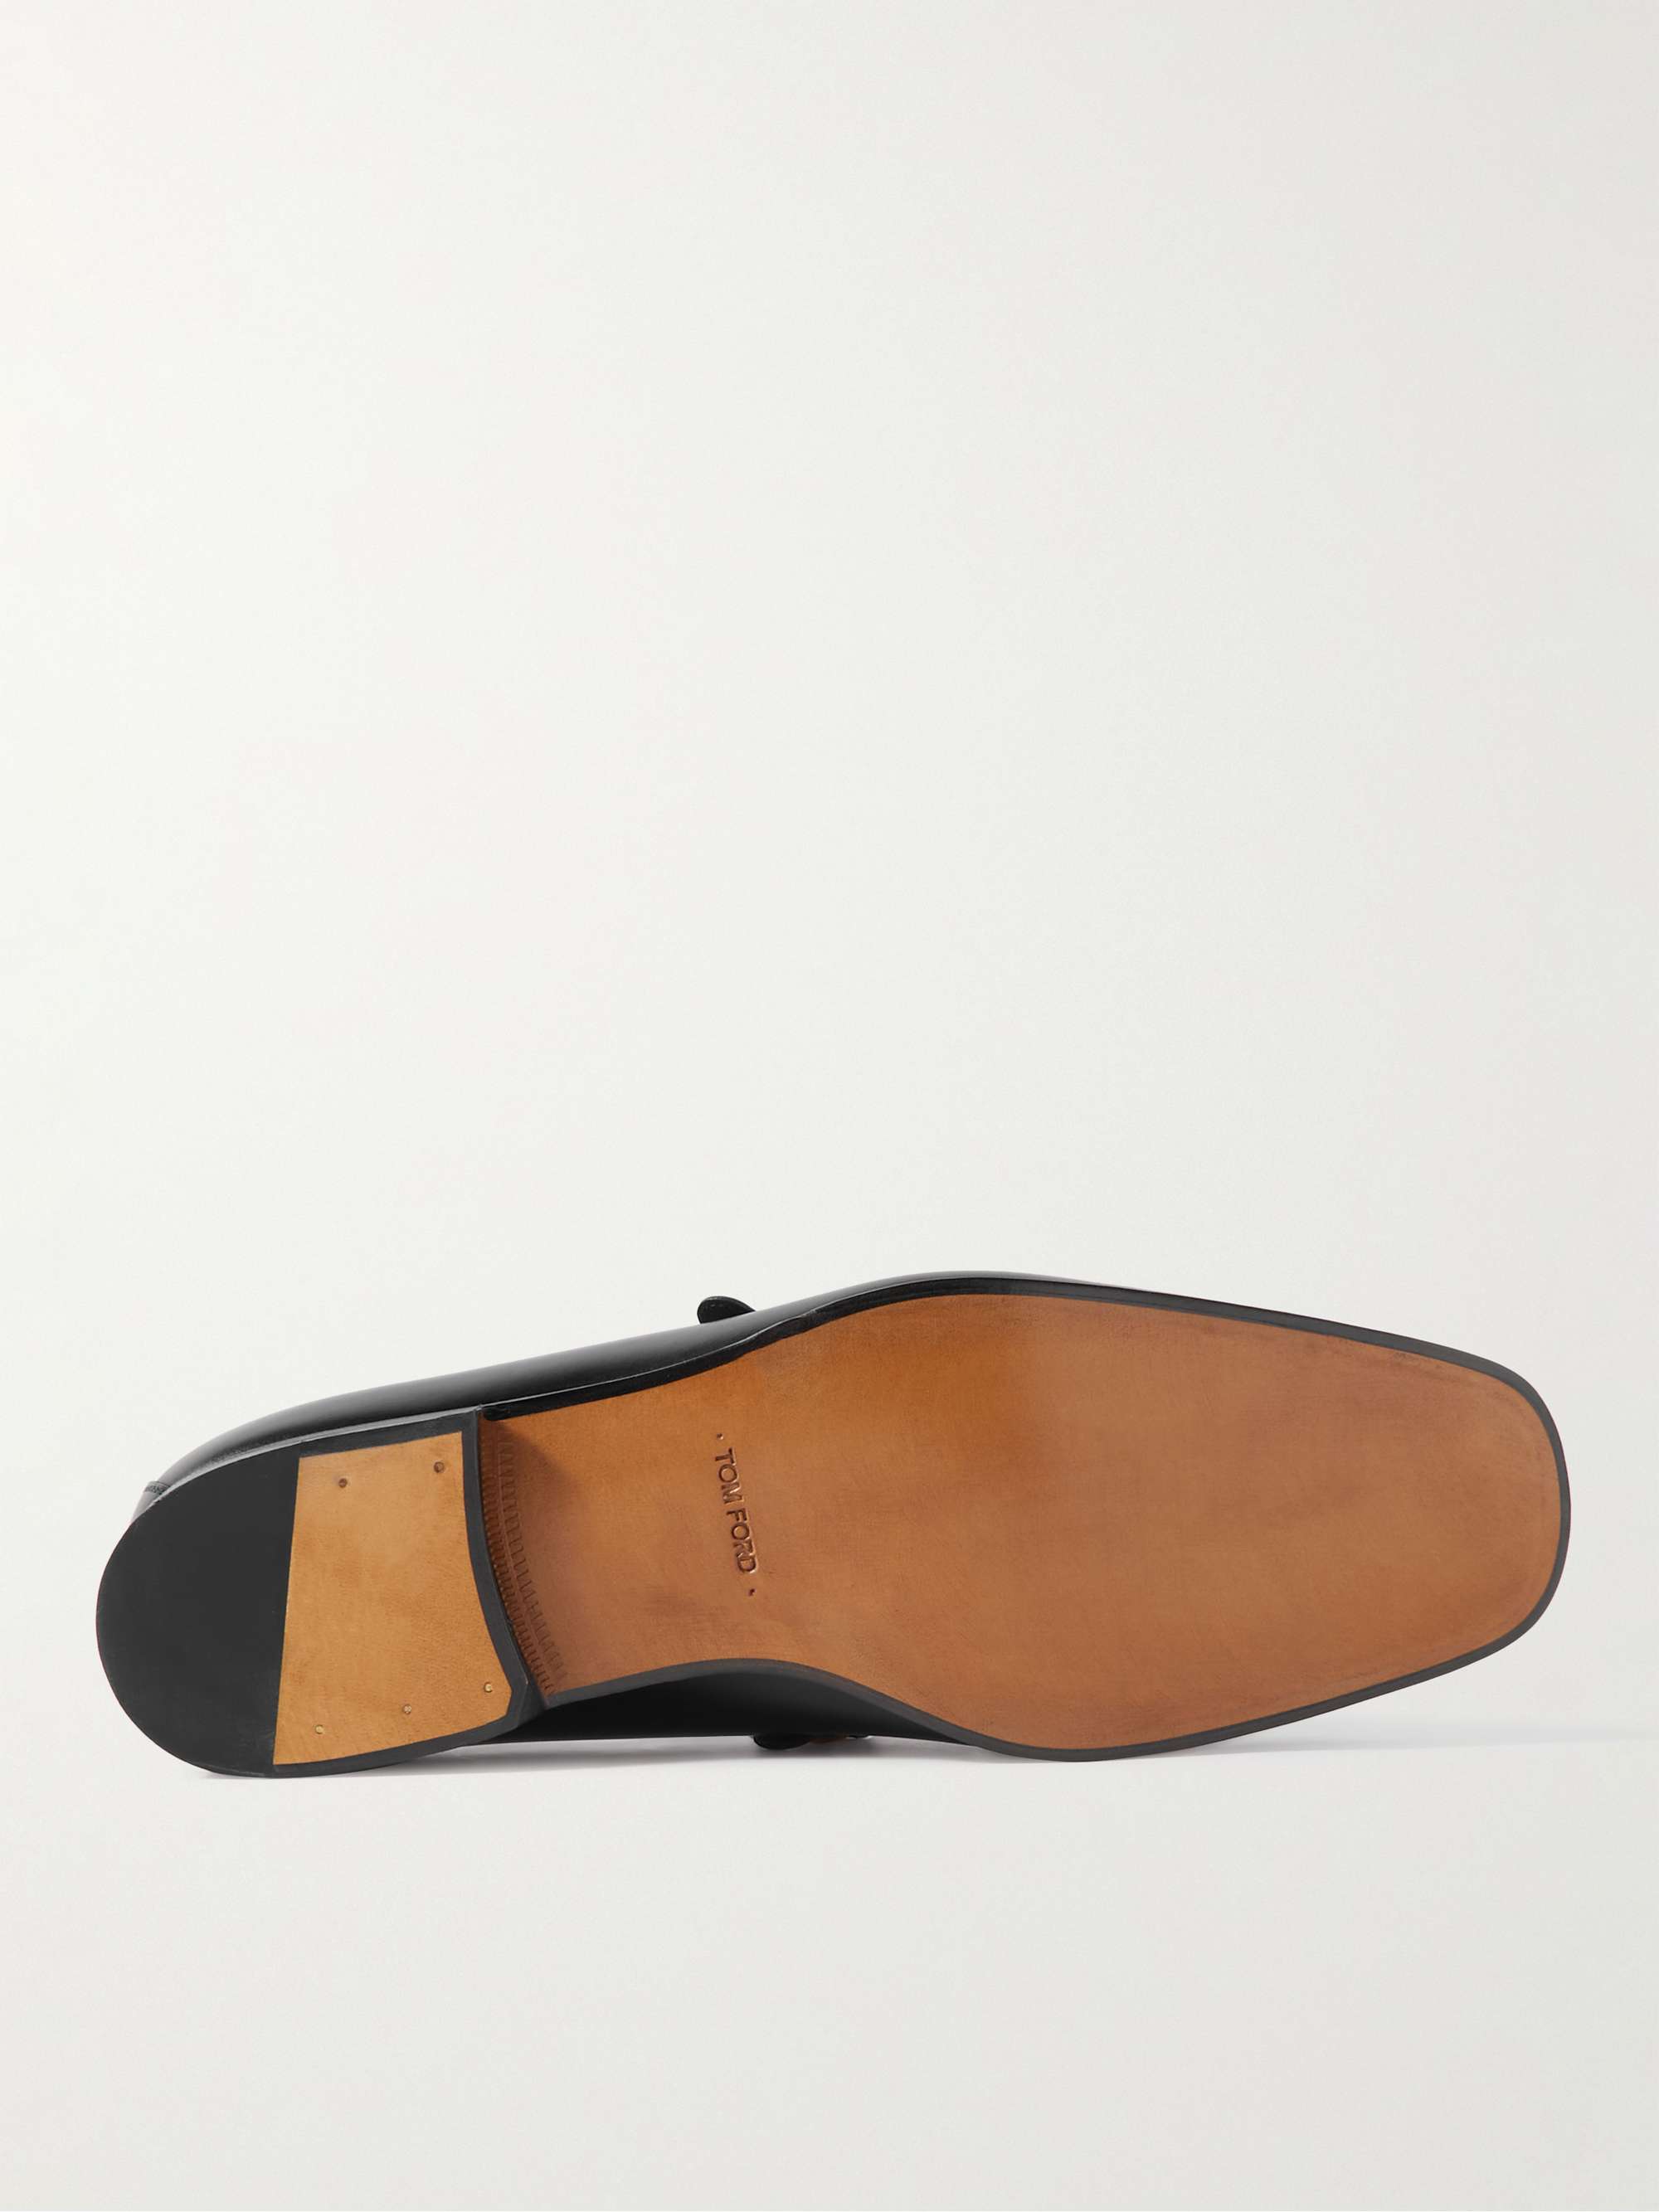 TOM FORD Jack Embellished Patent-Leather Loafers